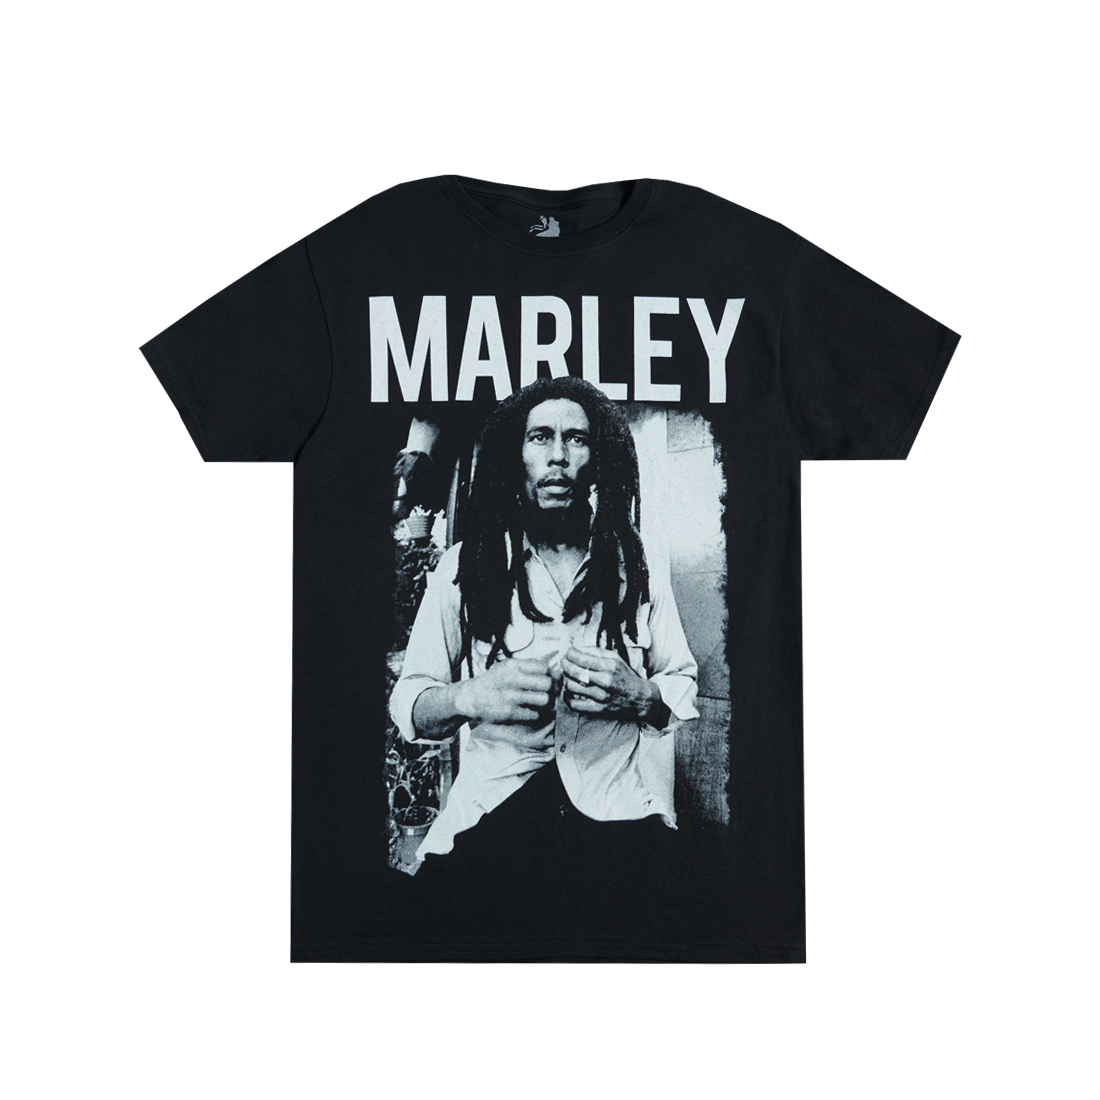 Bob Marley - Black & White T-Shirt